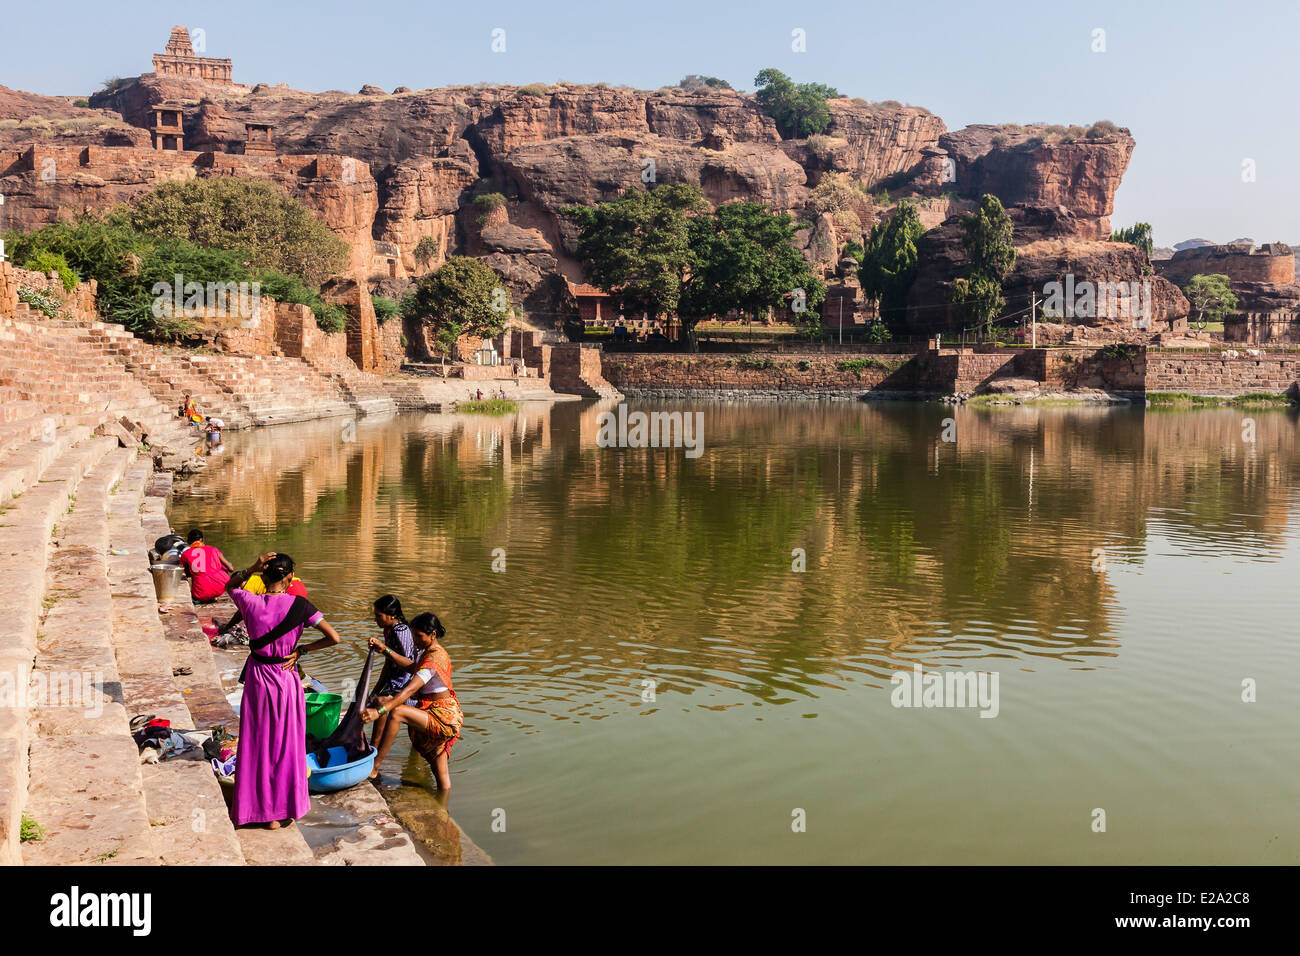 India, Karnataka state, Badami, washing near the lake Stock Photo